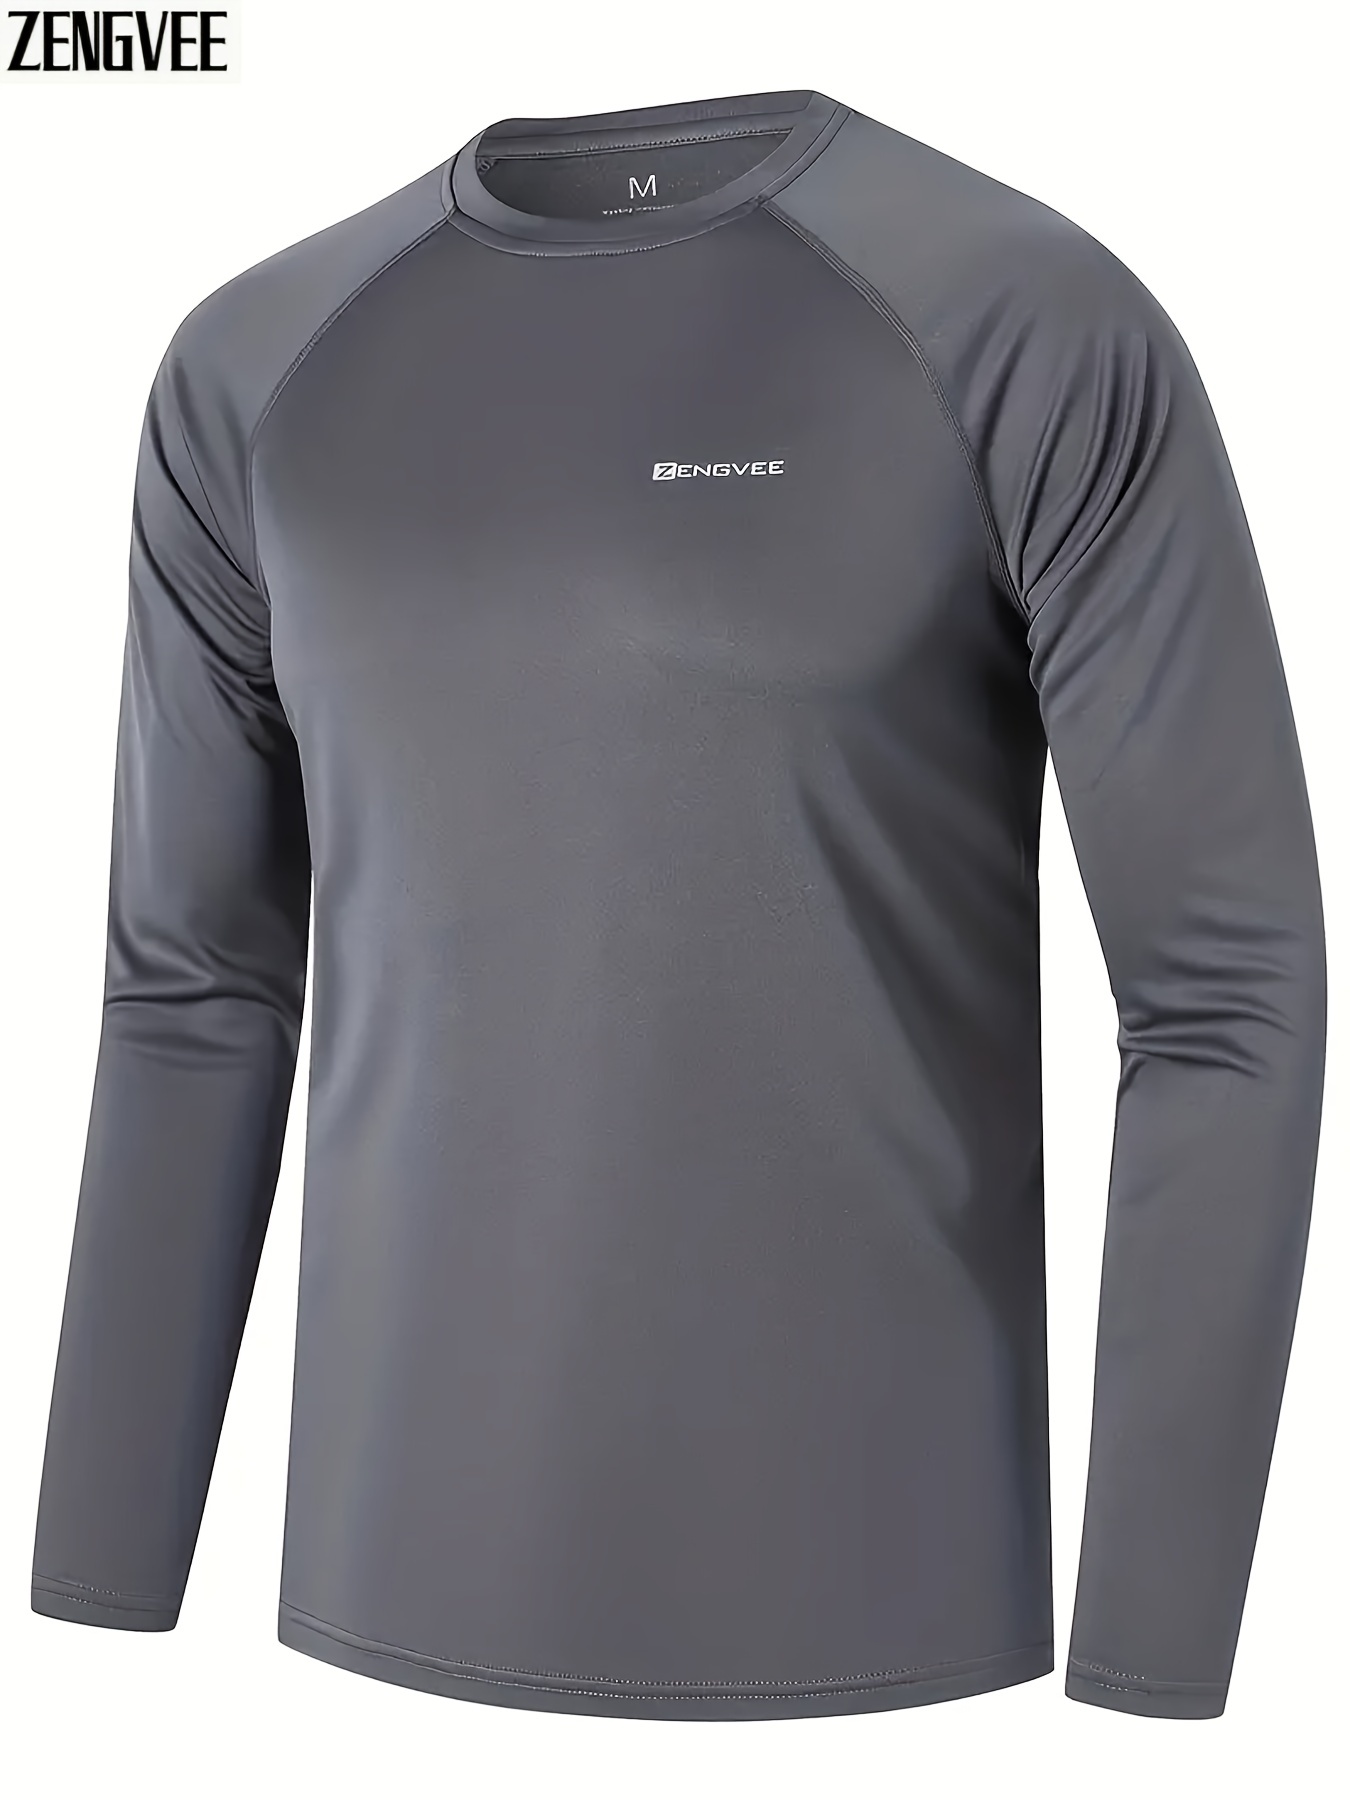 Magellan Black Athletic Long Sleeve Shirts for Men